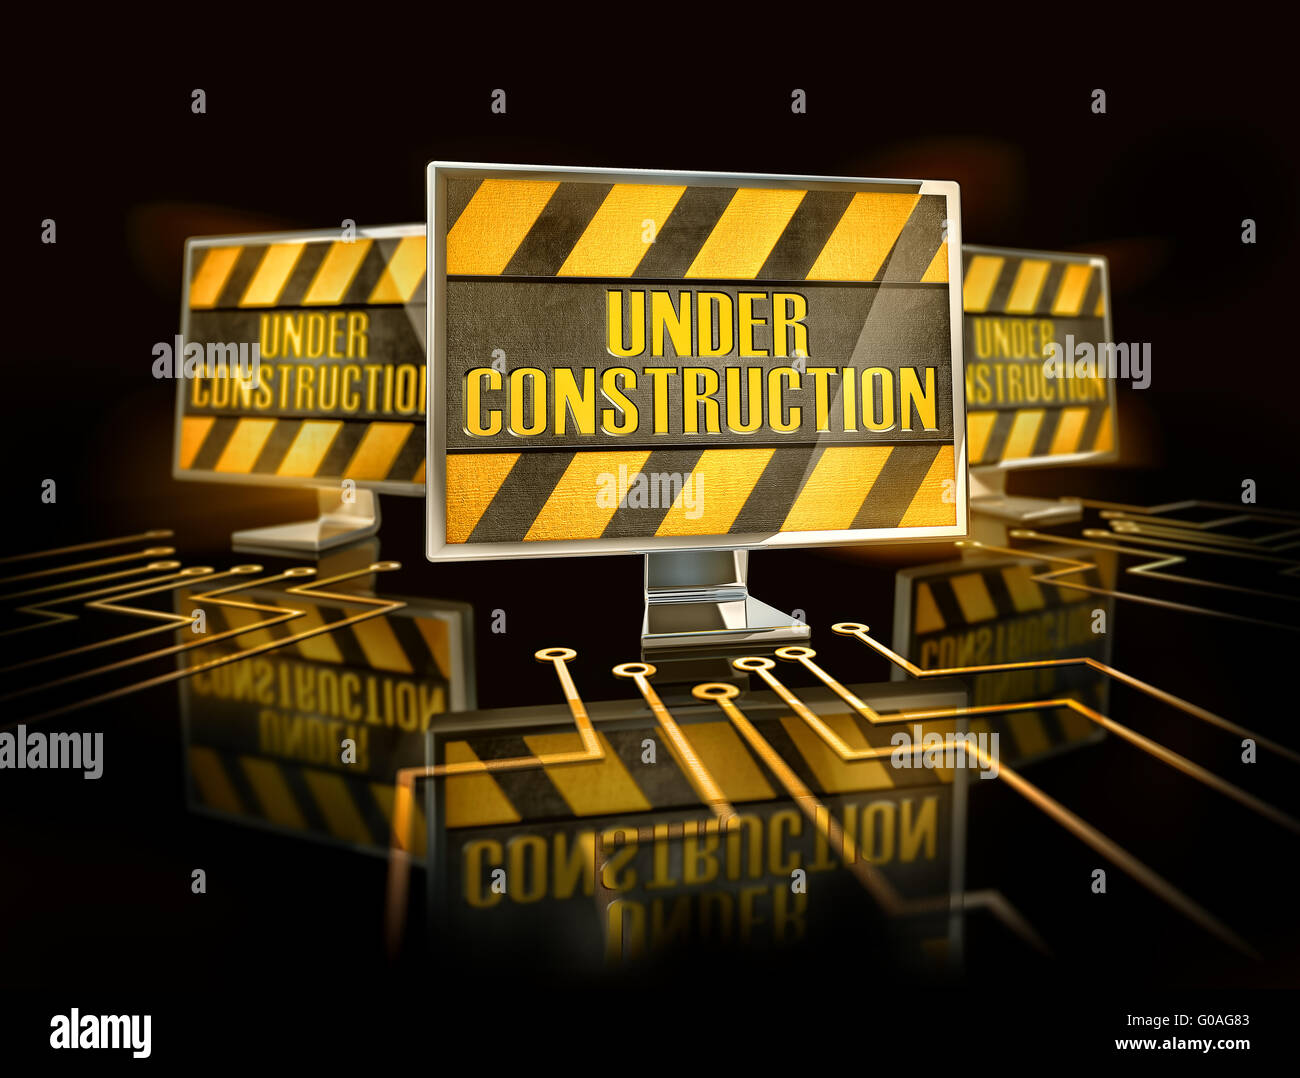 under construction Stock Photo